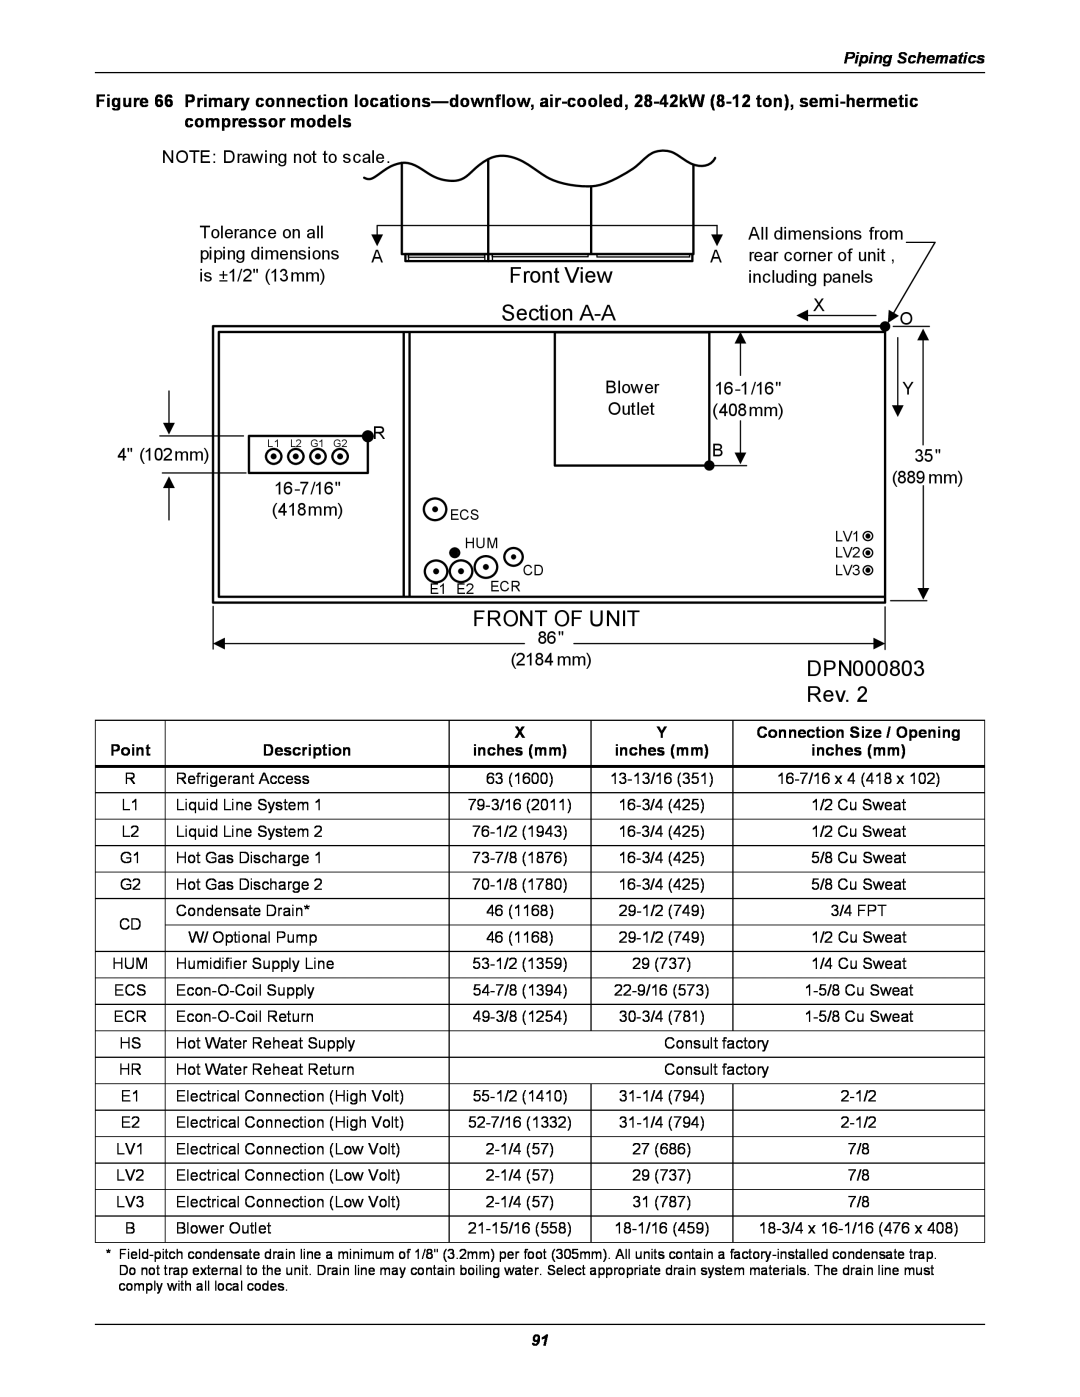 Liebert DS user manual Front View, Section A-A, Front Of Unit, DPN000803, L1 L2 G1 G2 